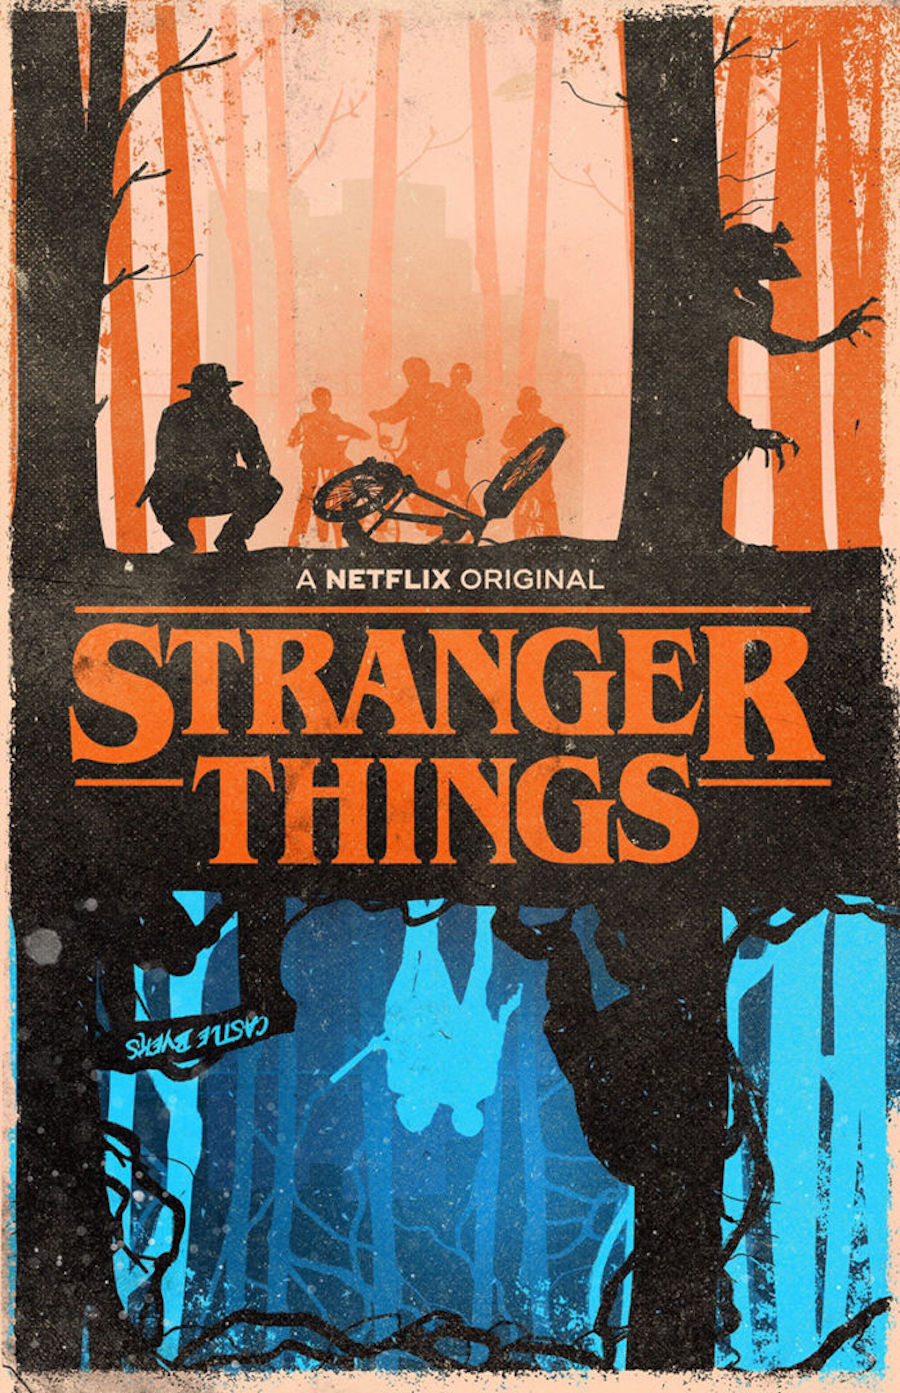 Superb Fan Art Posters of Stranger Things3